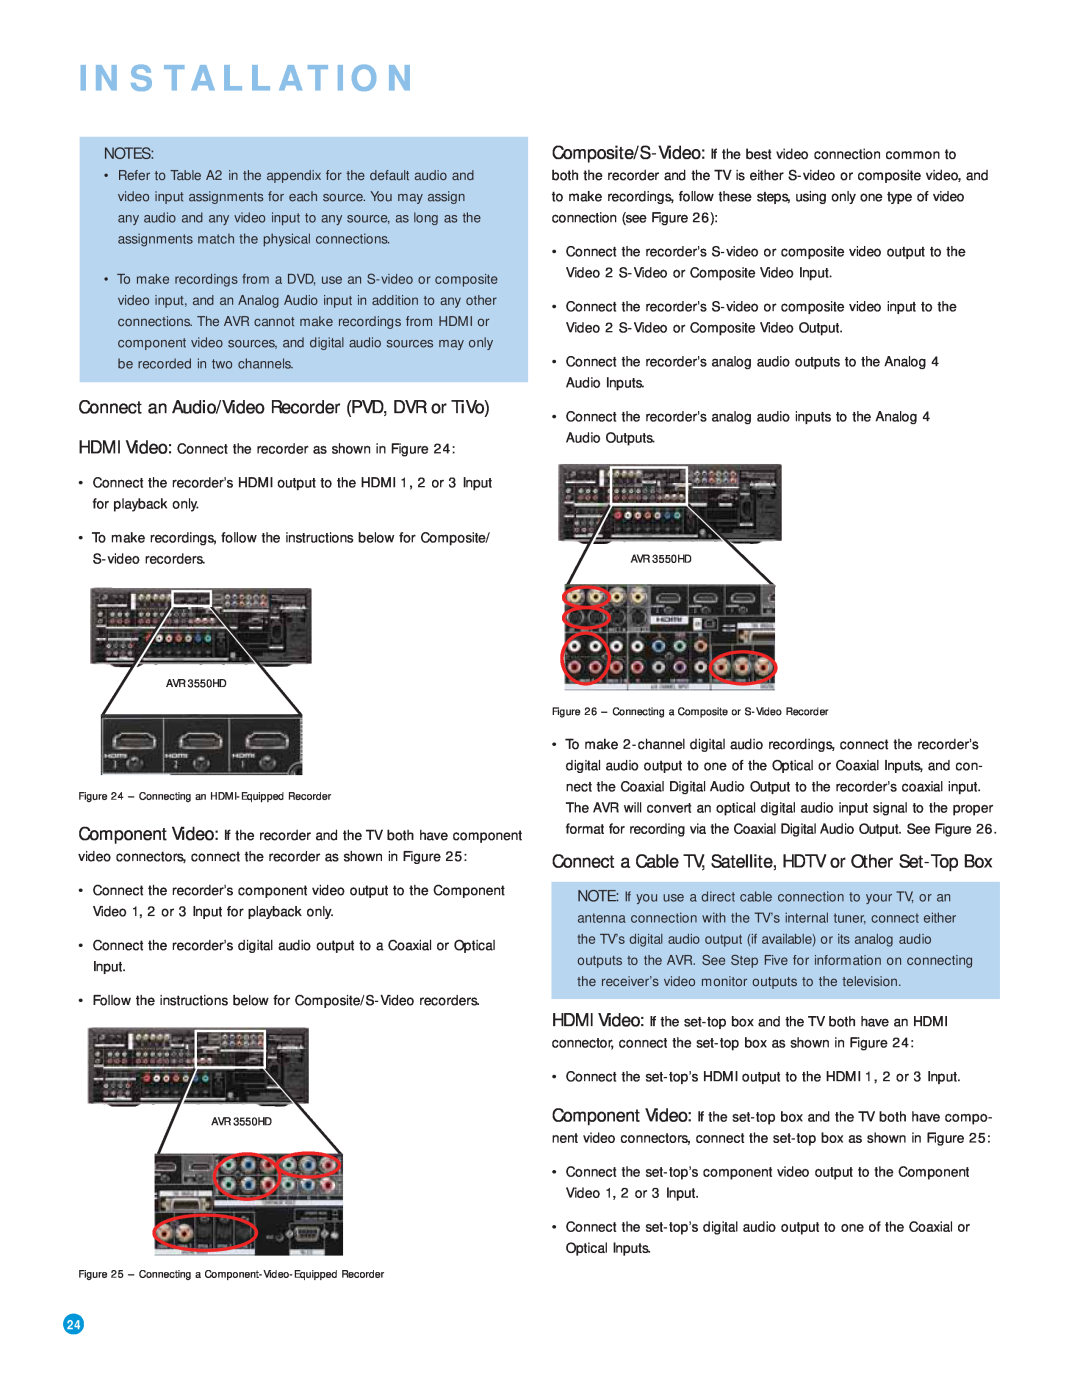 Harman-Kardon AVR 3550HD owner manual Connect an Audio/Video Recorder PVD, DVR or TiVo, Installation 